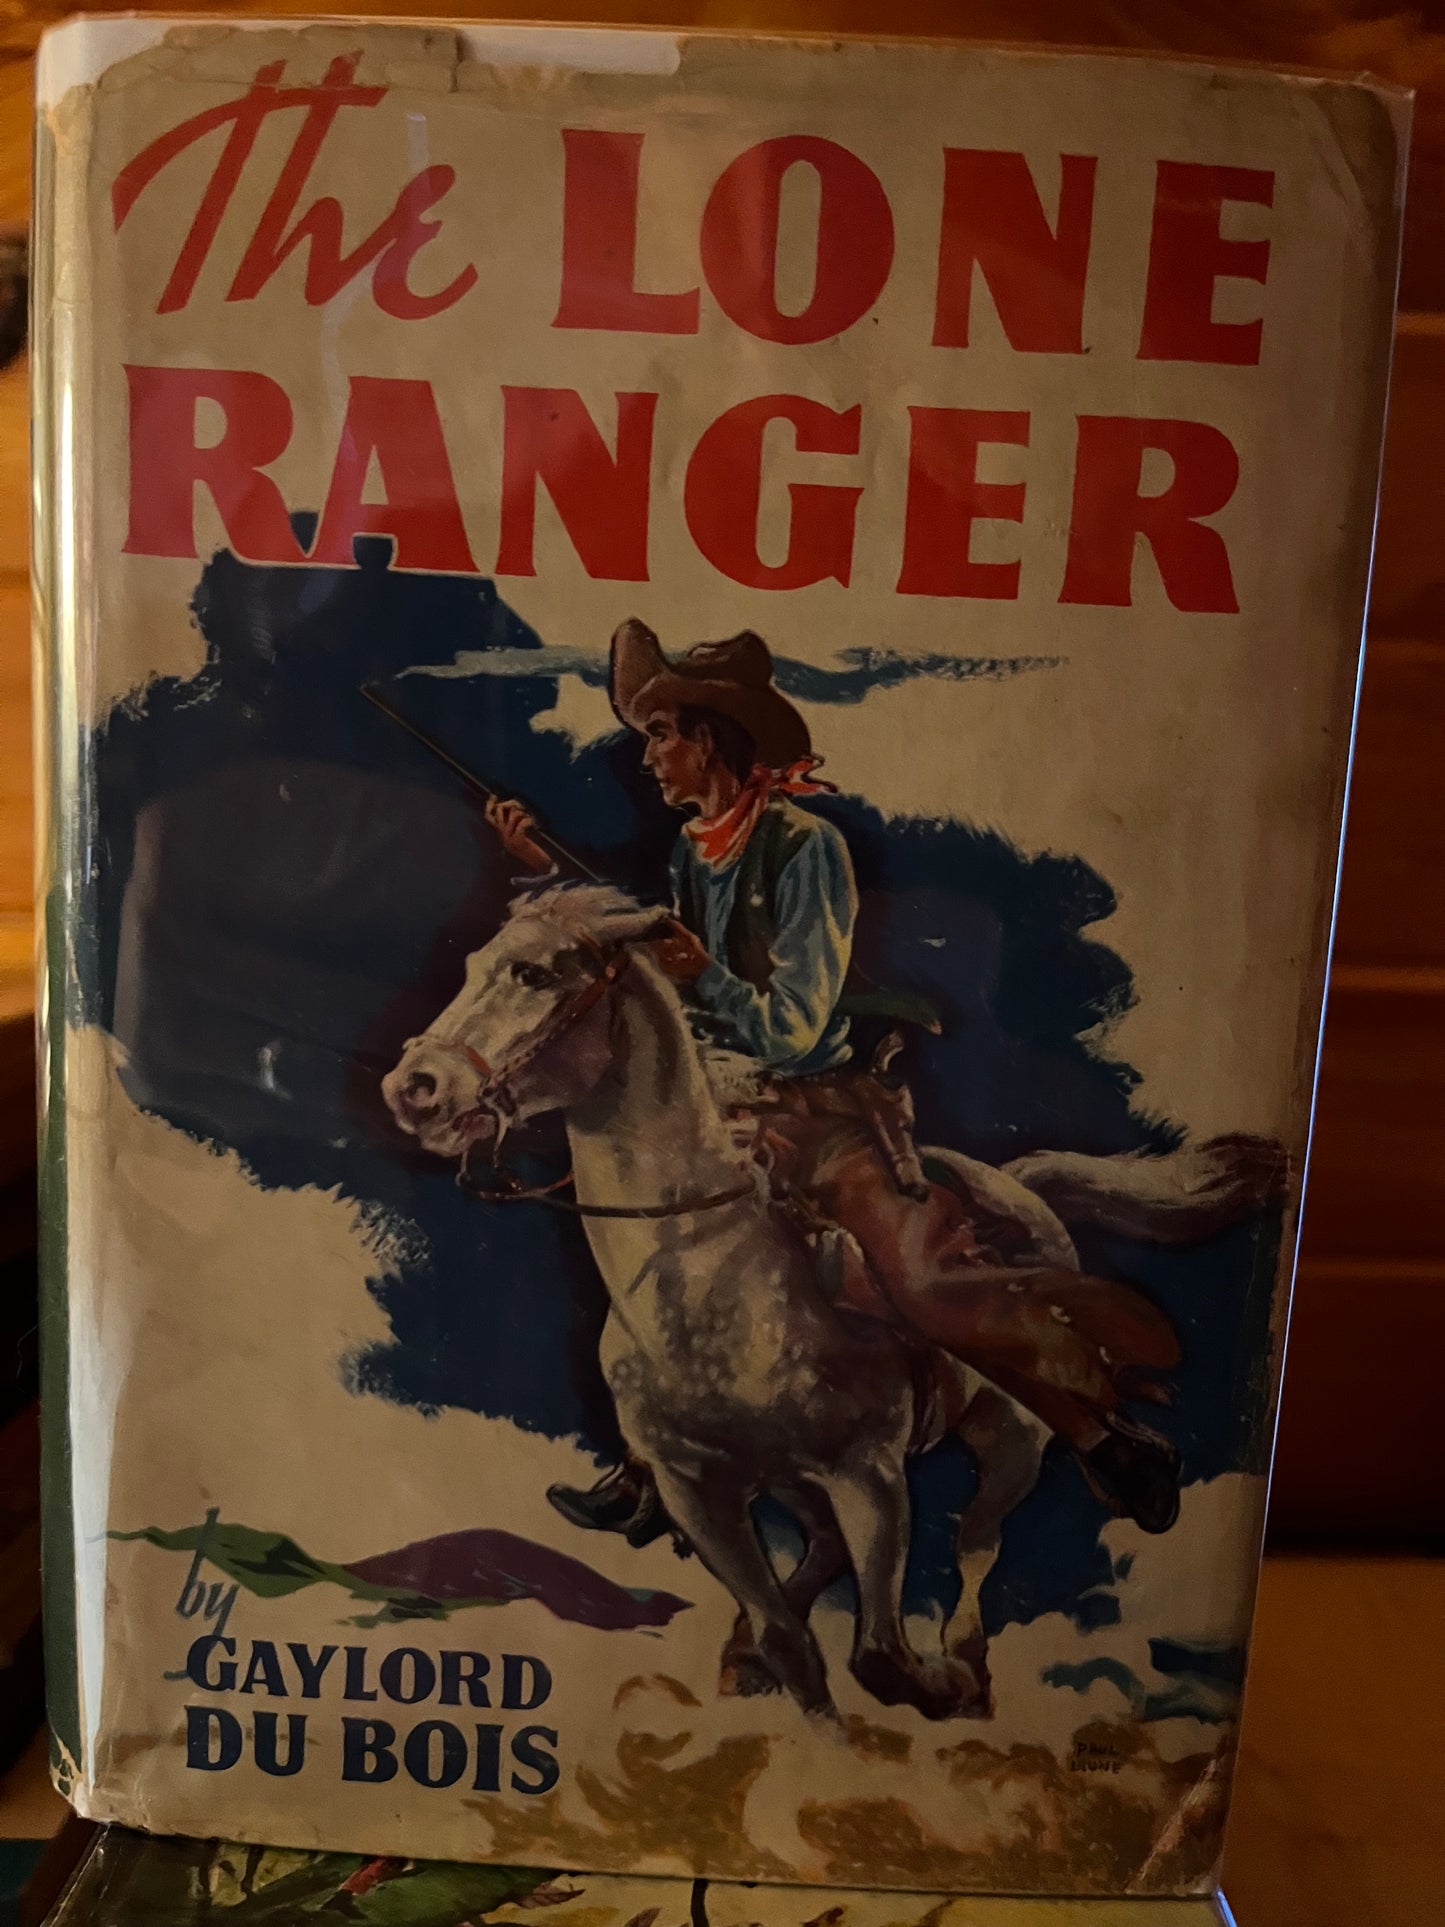 THE LONE RANGER (1936 novel) with ORIGINAL DUST JACKET